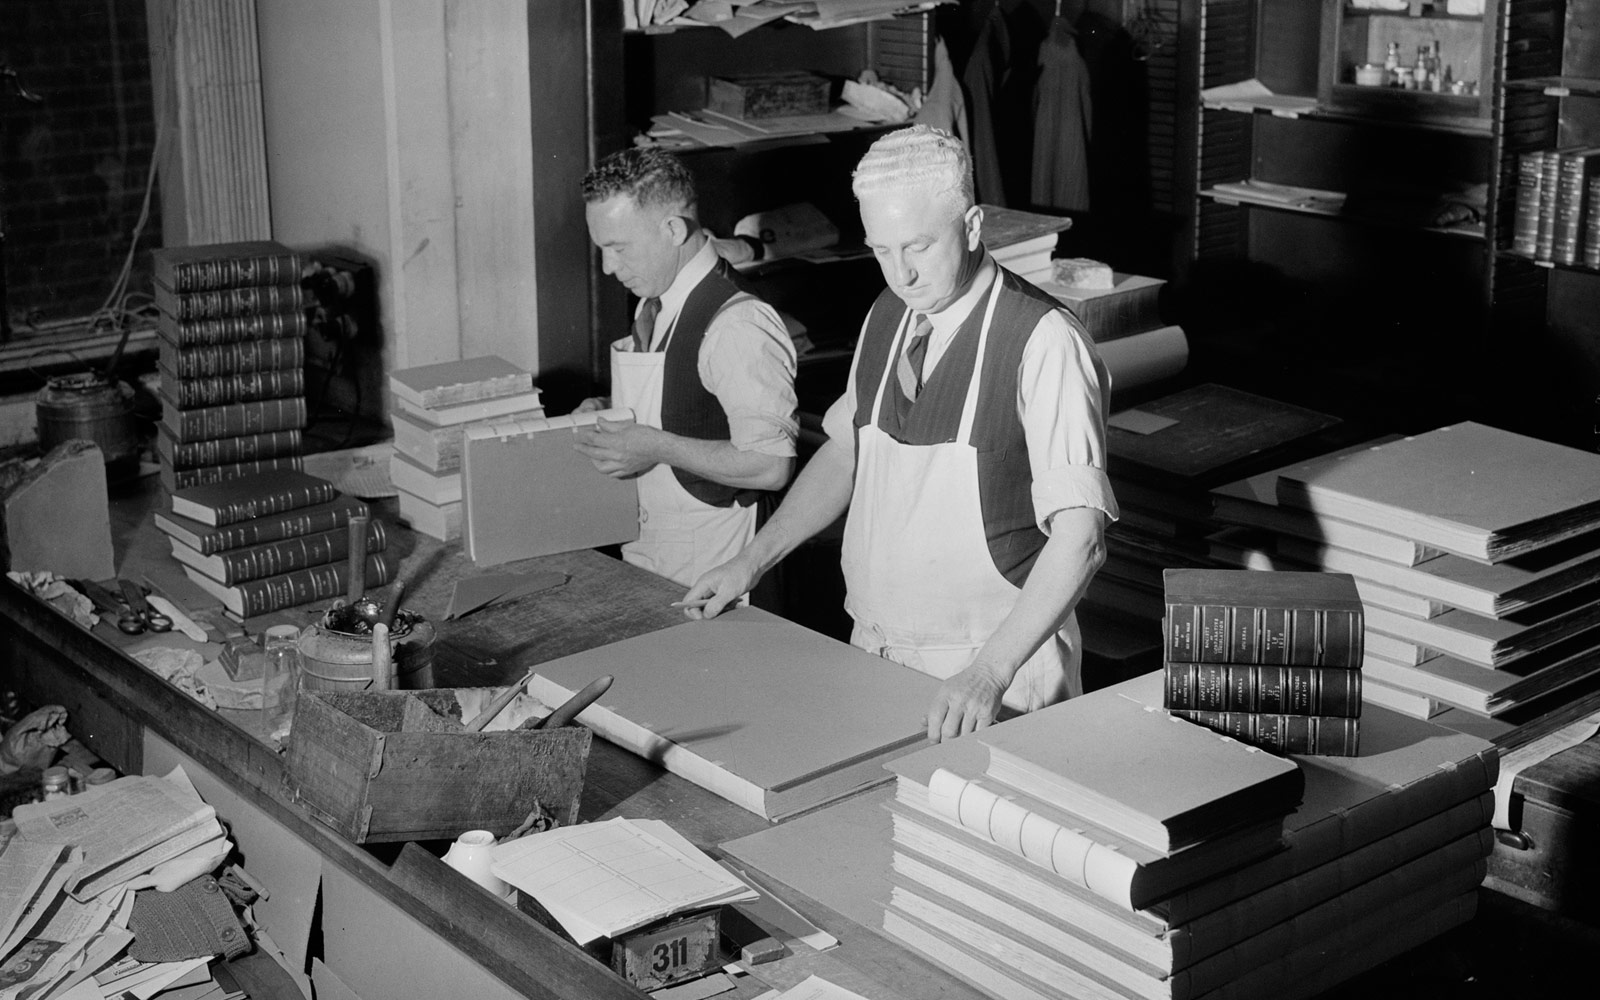 Dos homes enquadernant llibres, 1943